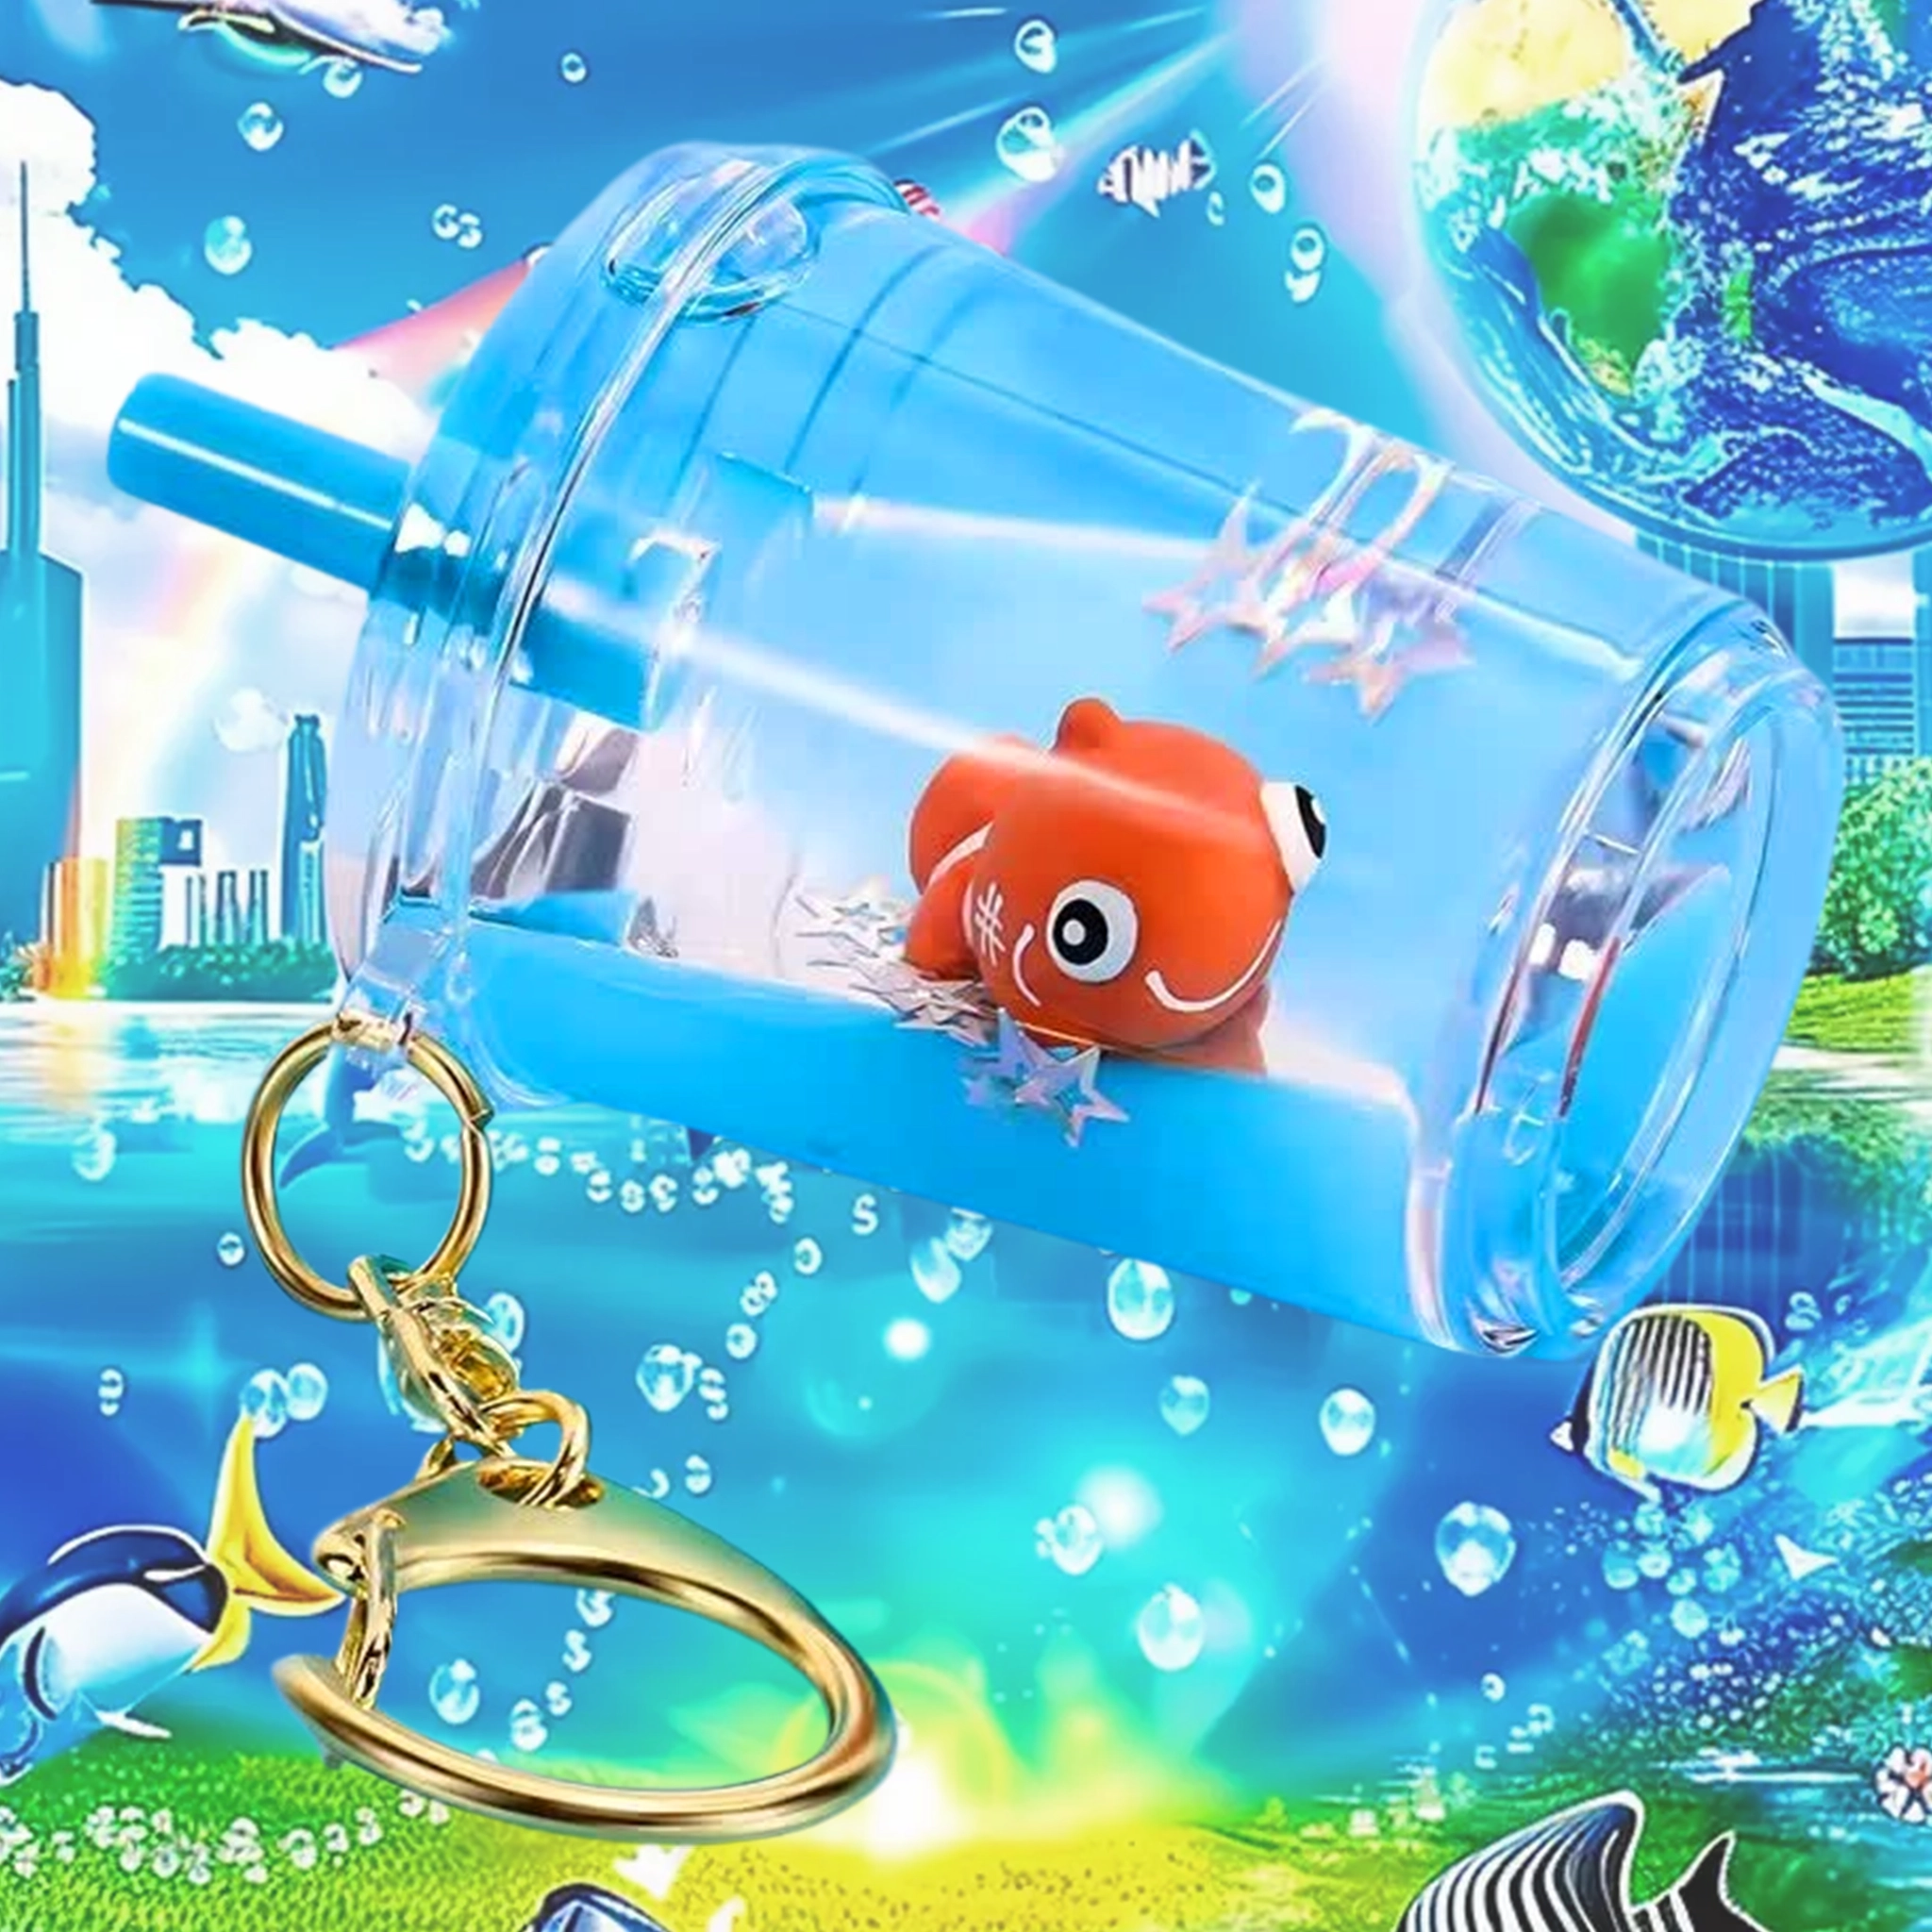 Frutiger Aero Keychain - Floaty Bubble Tea with Liquid and Floating Clownfish